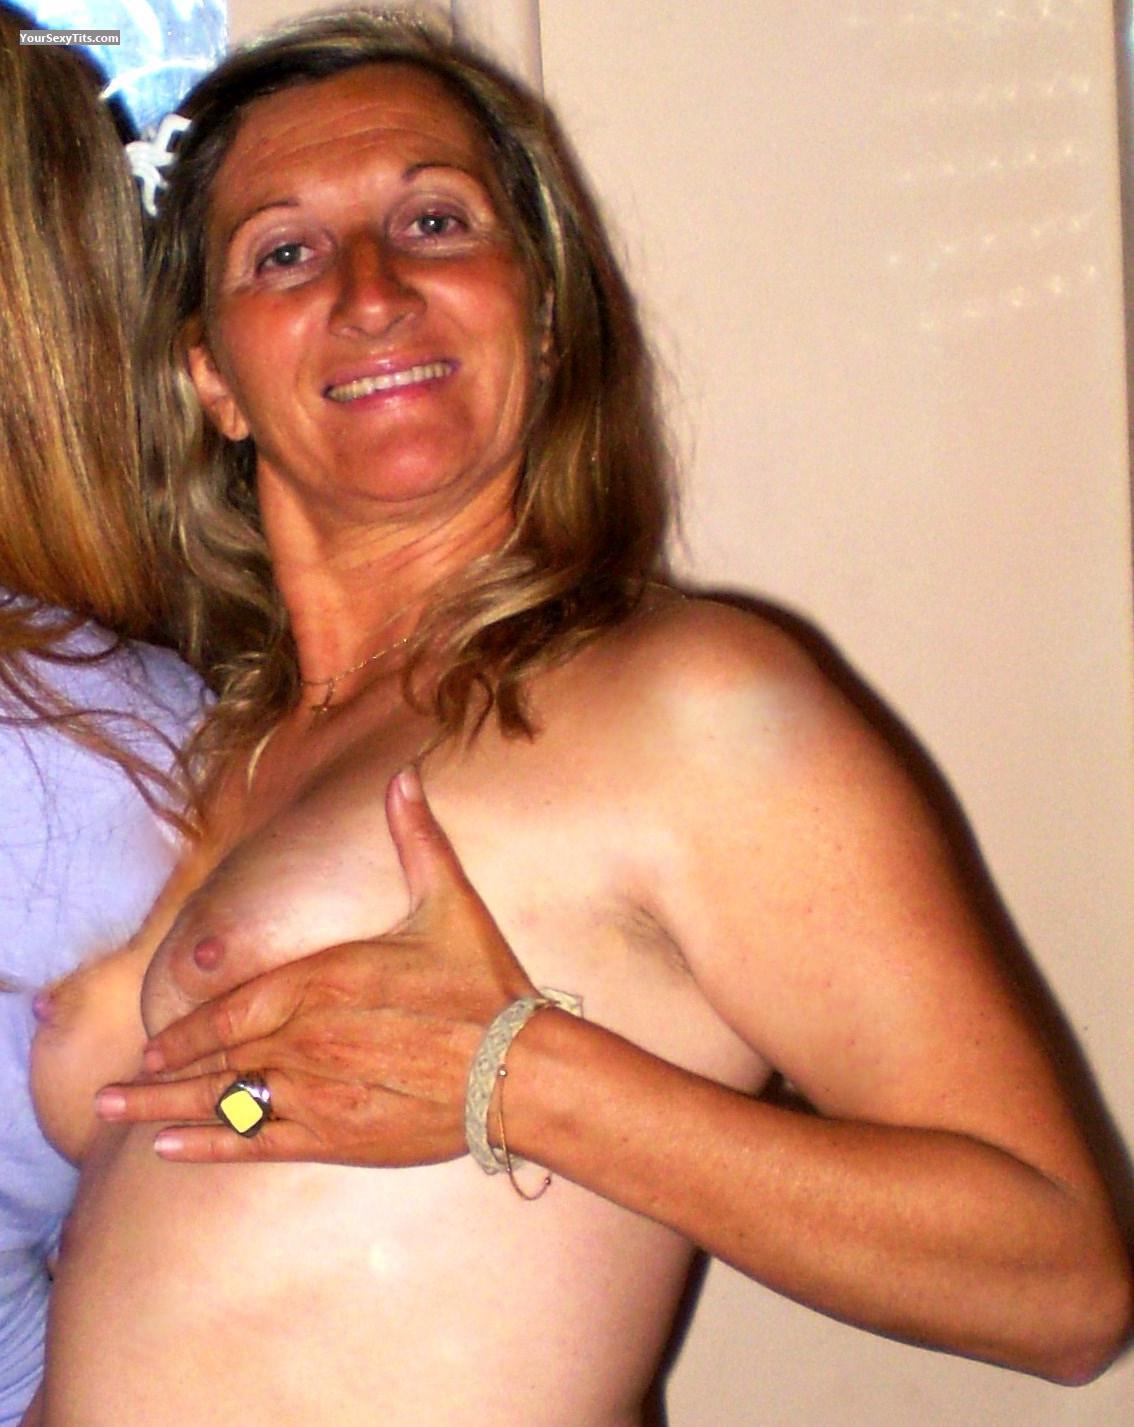 Tit Flash: Medium Tits - Topless Cristy from Argentina